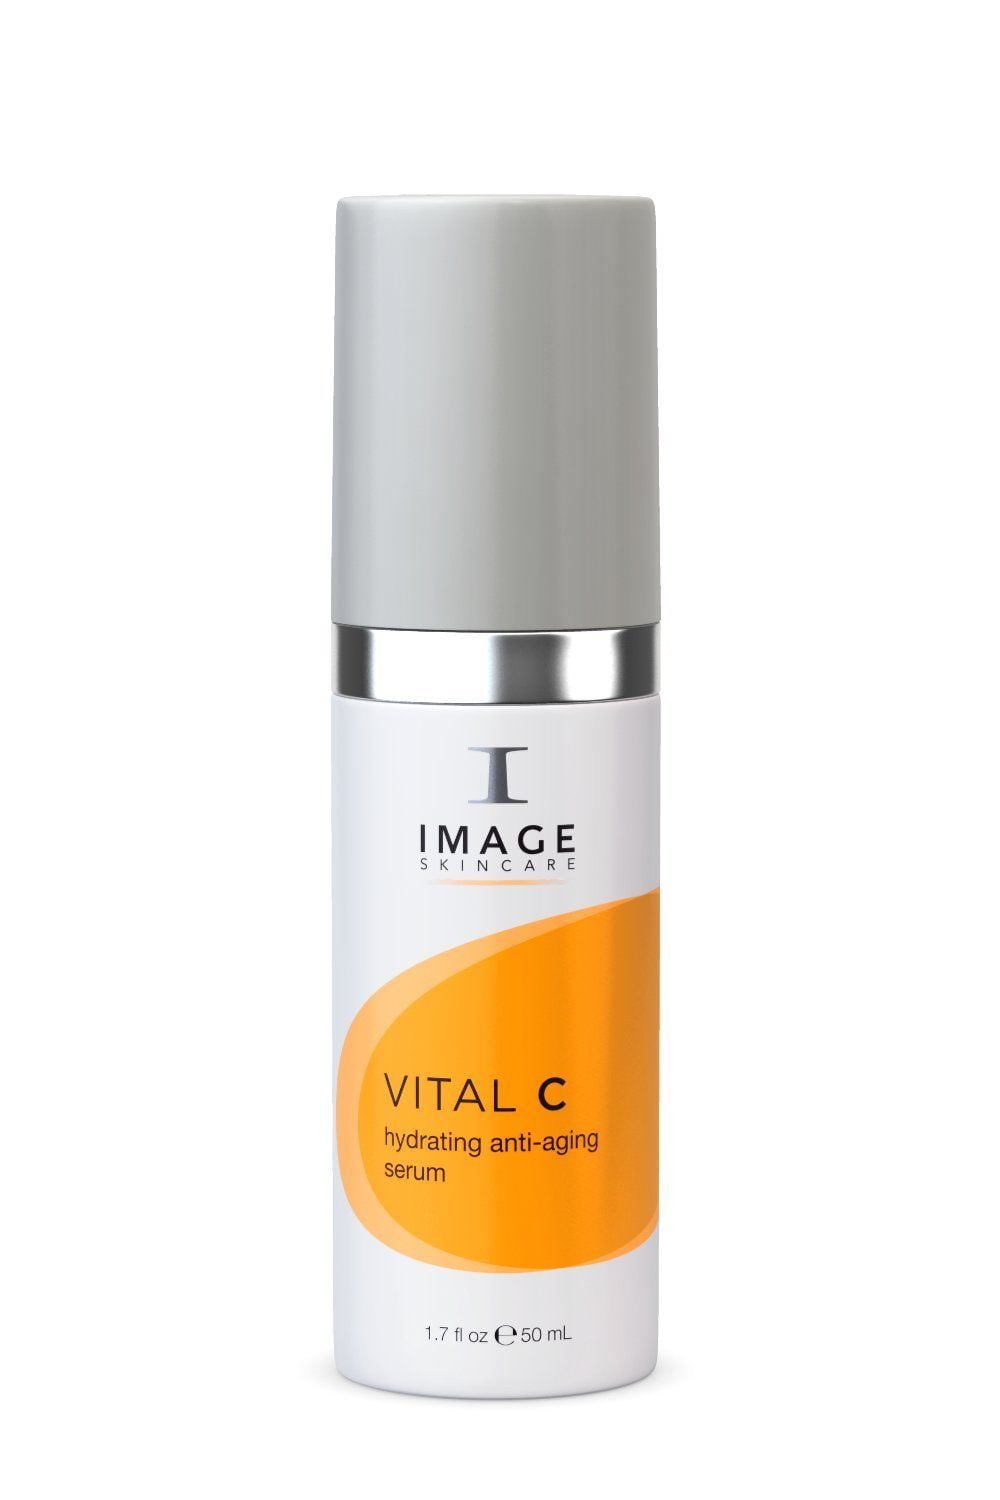 image vital c hydrating anti aging serum ingredients